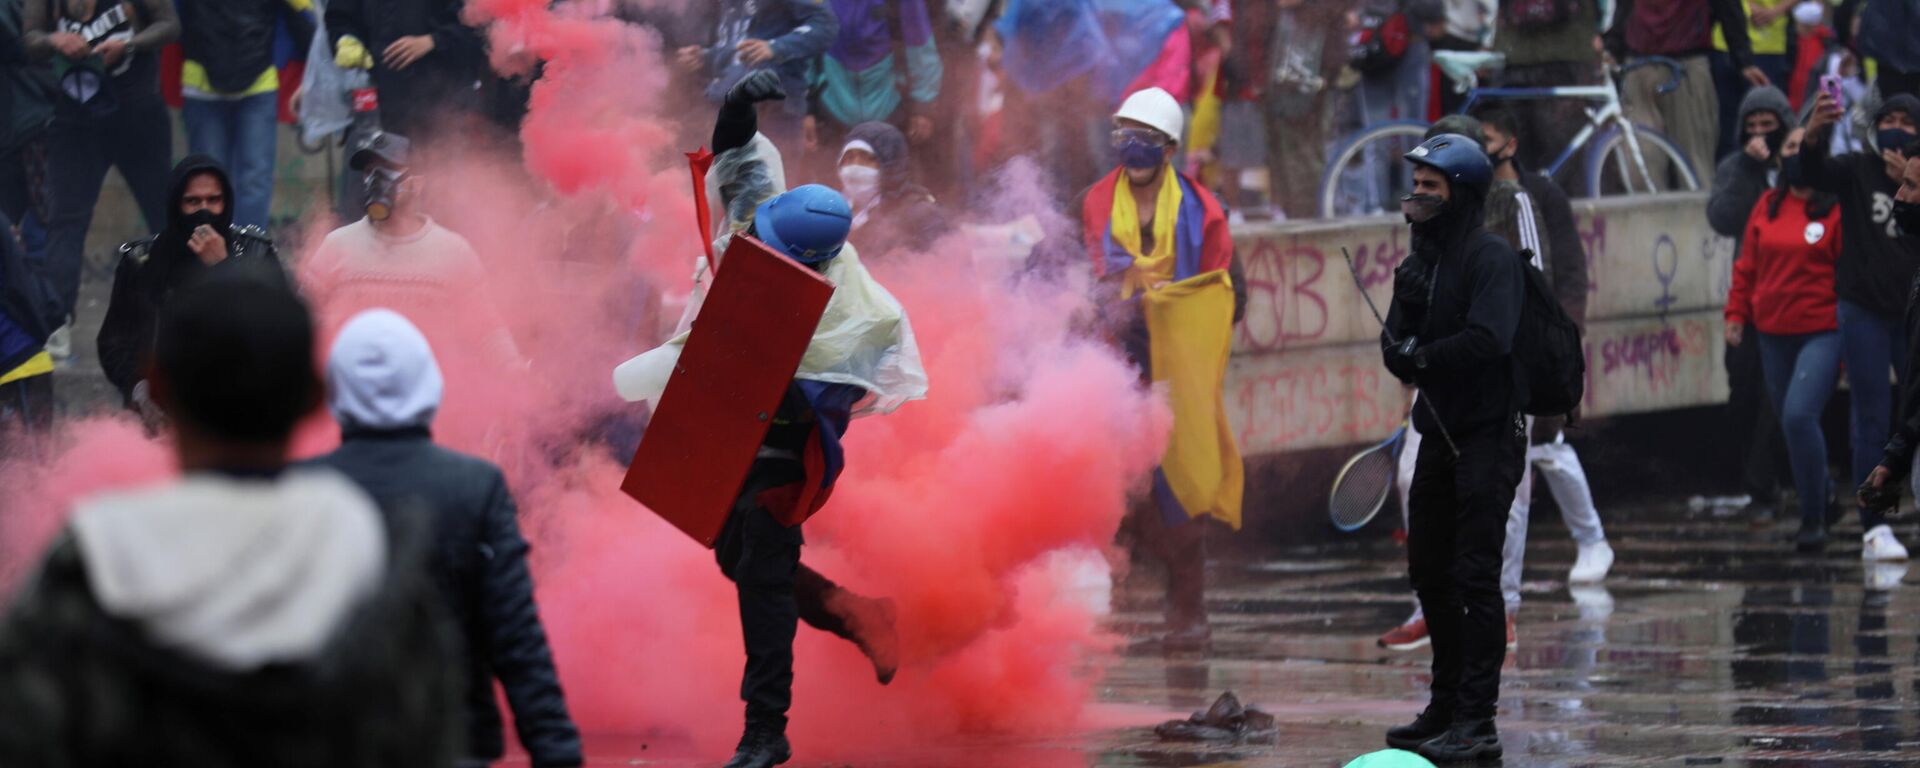 Protestas en Colombia - Sputnik Mundo, 1920, 06.05.2021